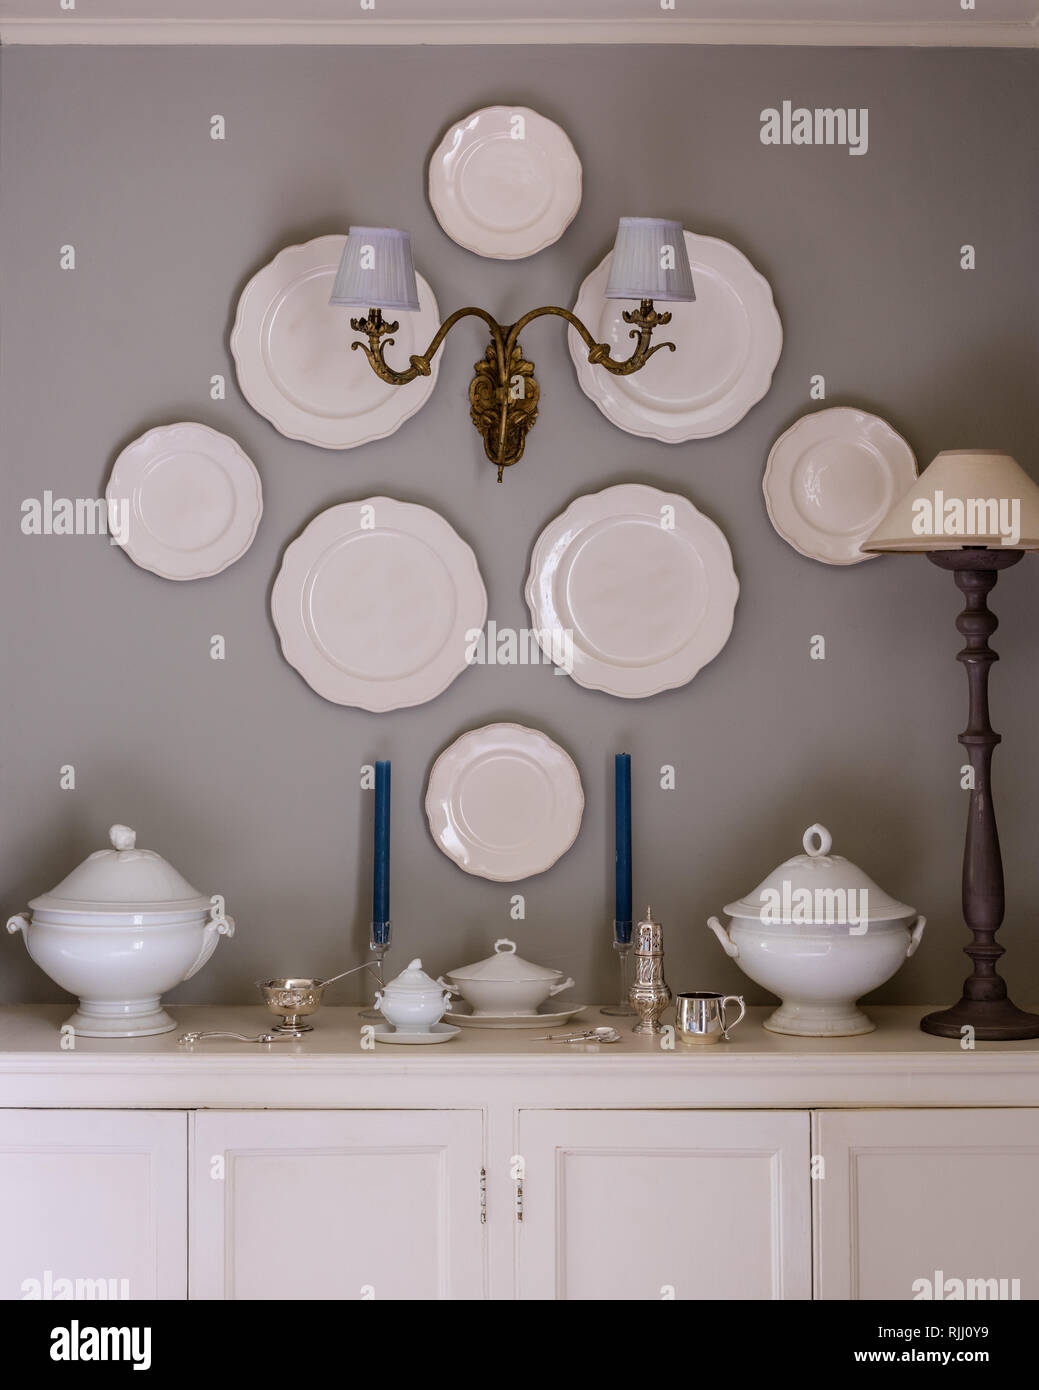 Decorative plates wall mounted Stock Photo